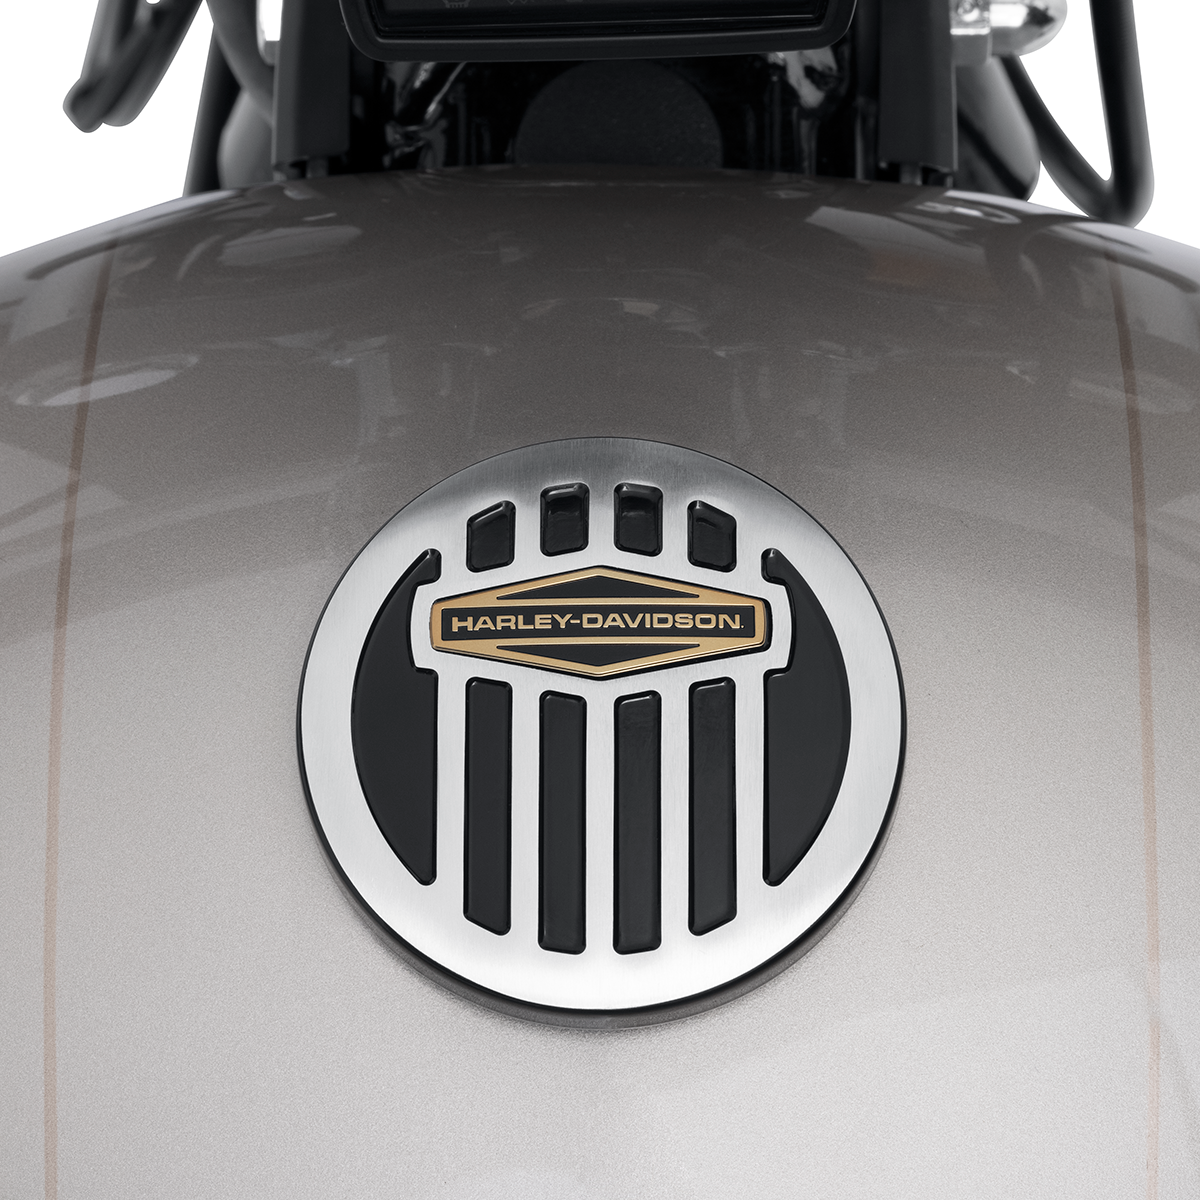 Harley-Davidson - ‘66 Collection Fuel Cap